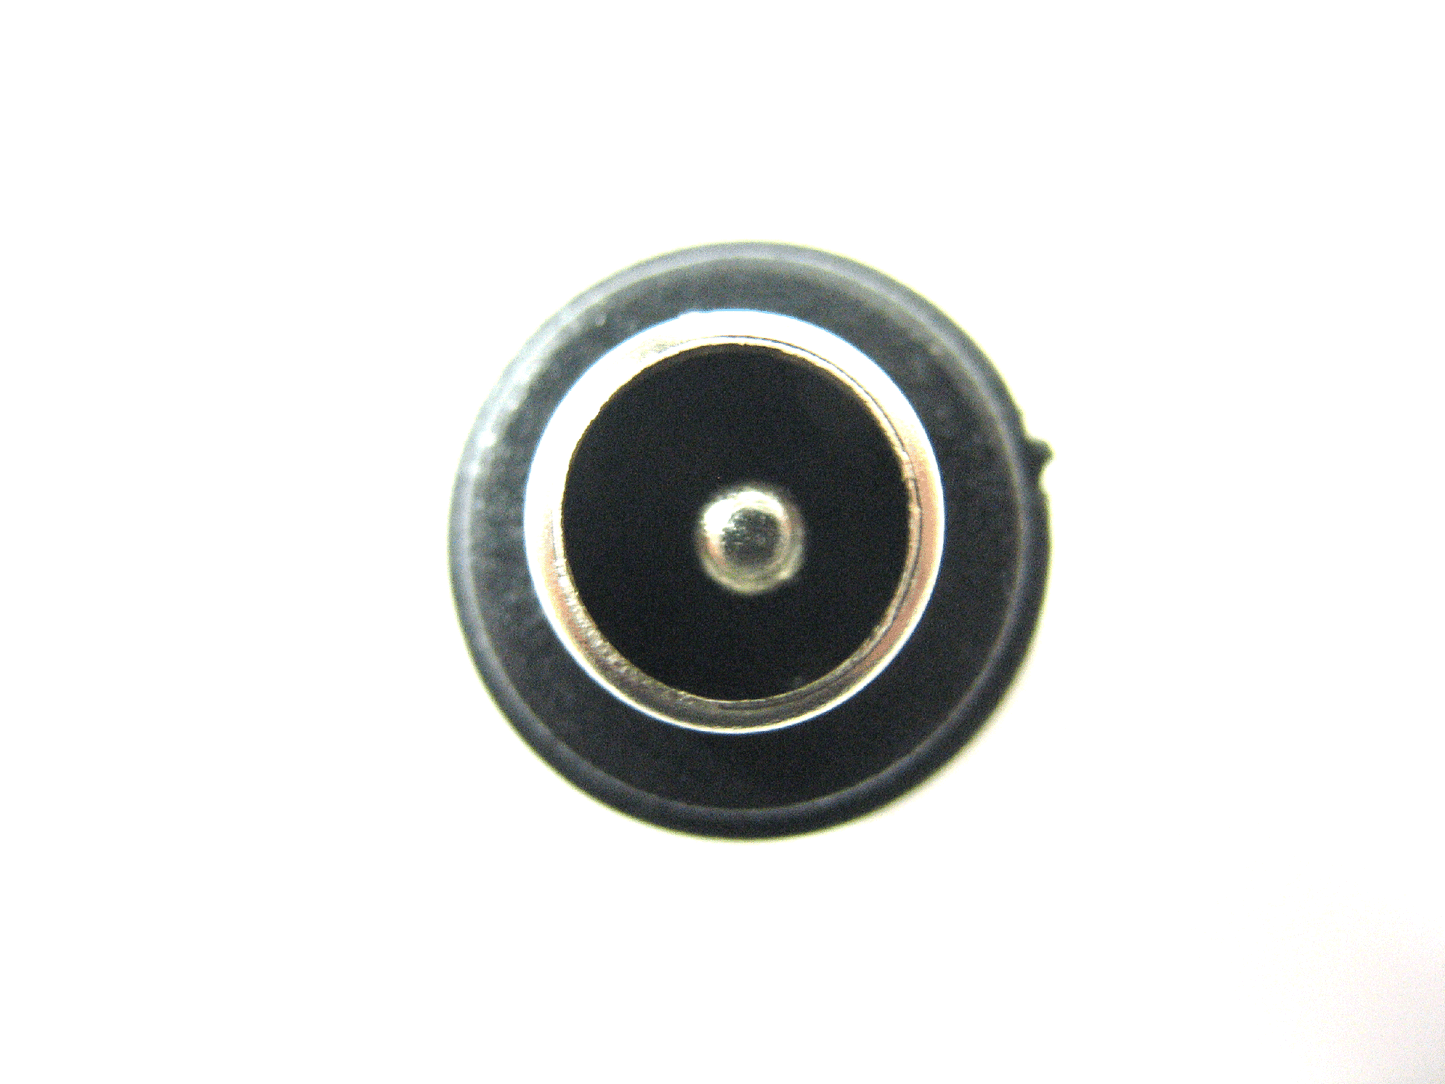 2.1mm x 5.5mm to 6.0mm x 4.4mm DC Power Plug Adaptor